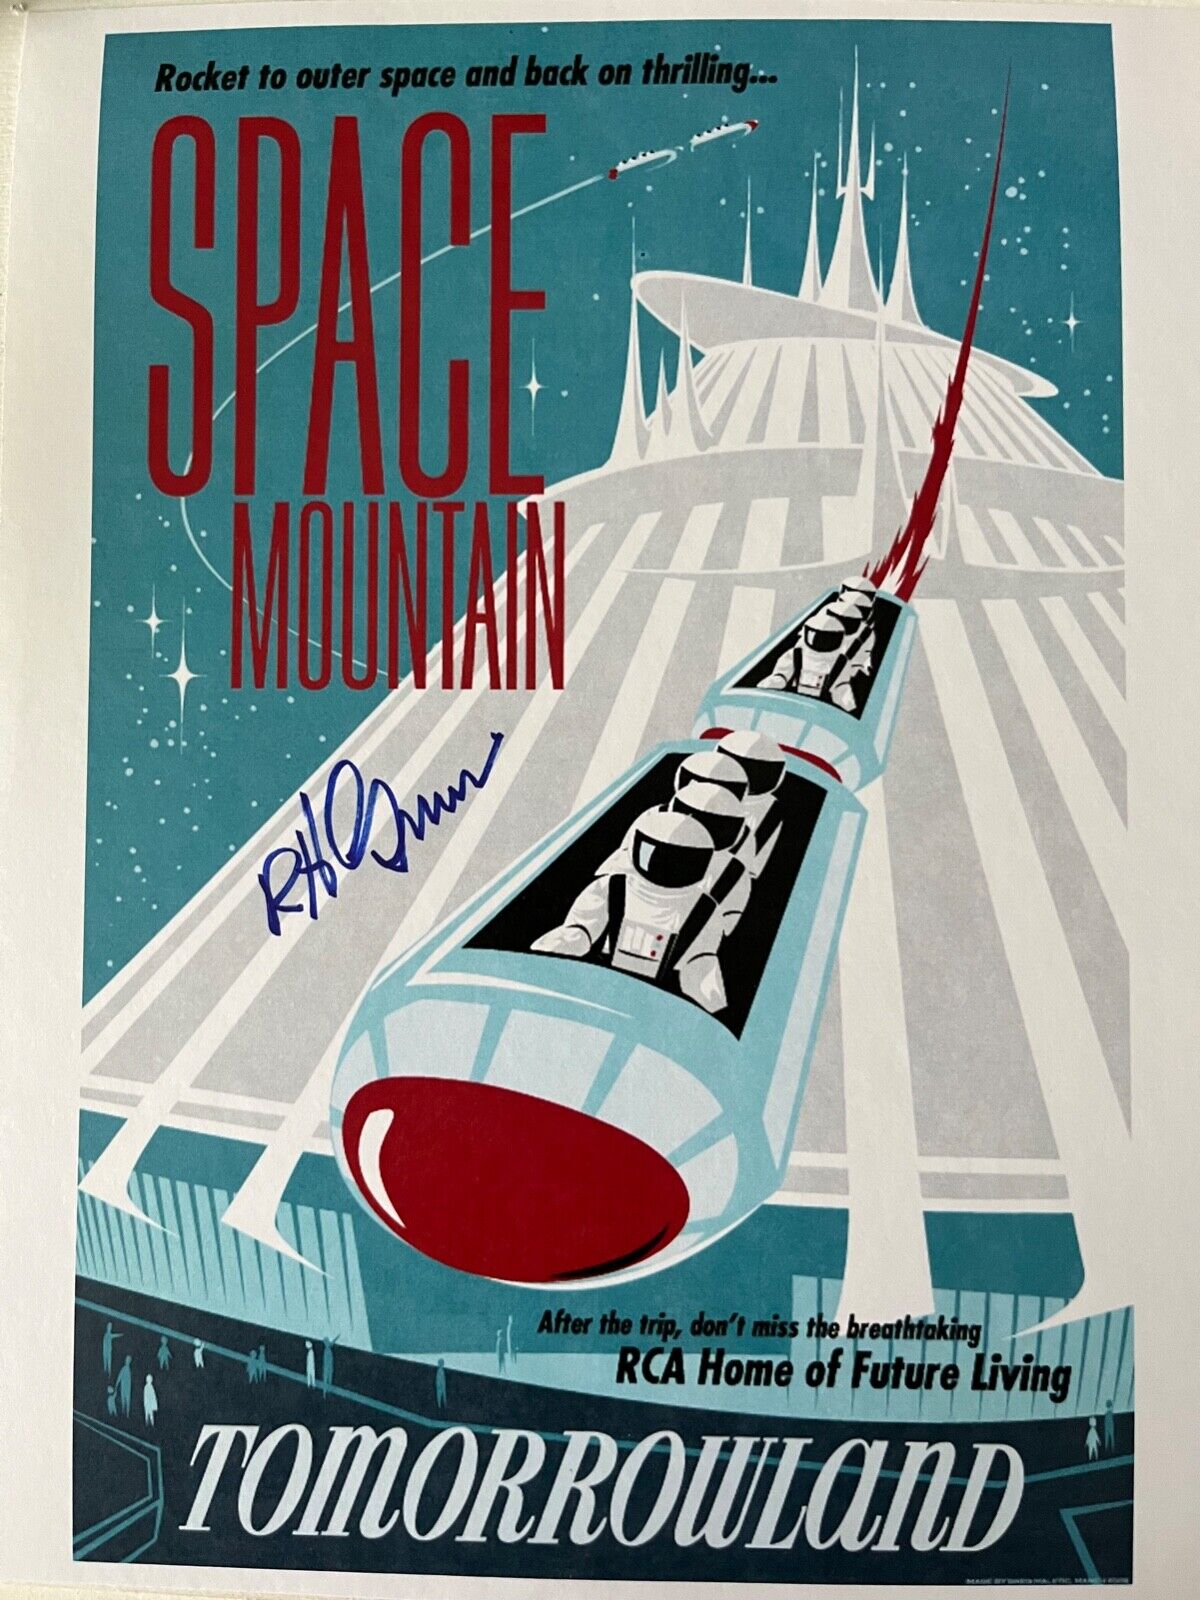 Disneyland Space Mountain Print, signed by designer & Legend Bob Gurr